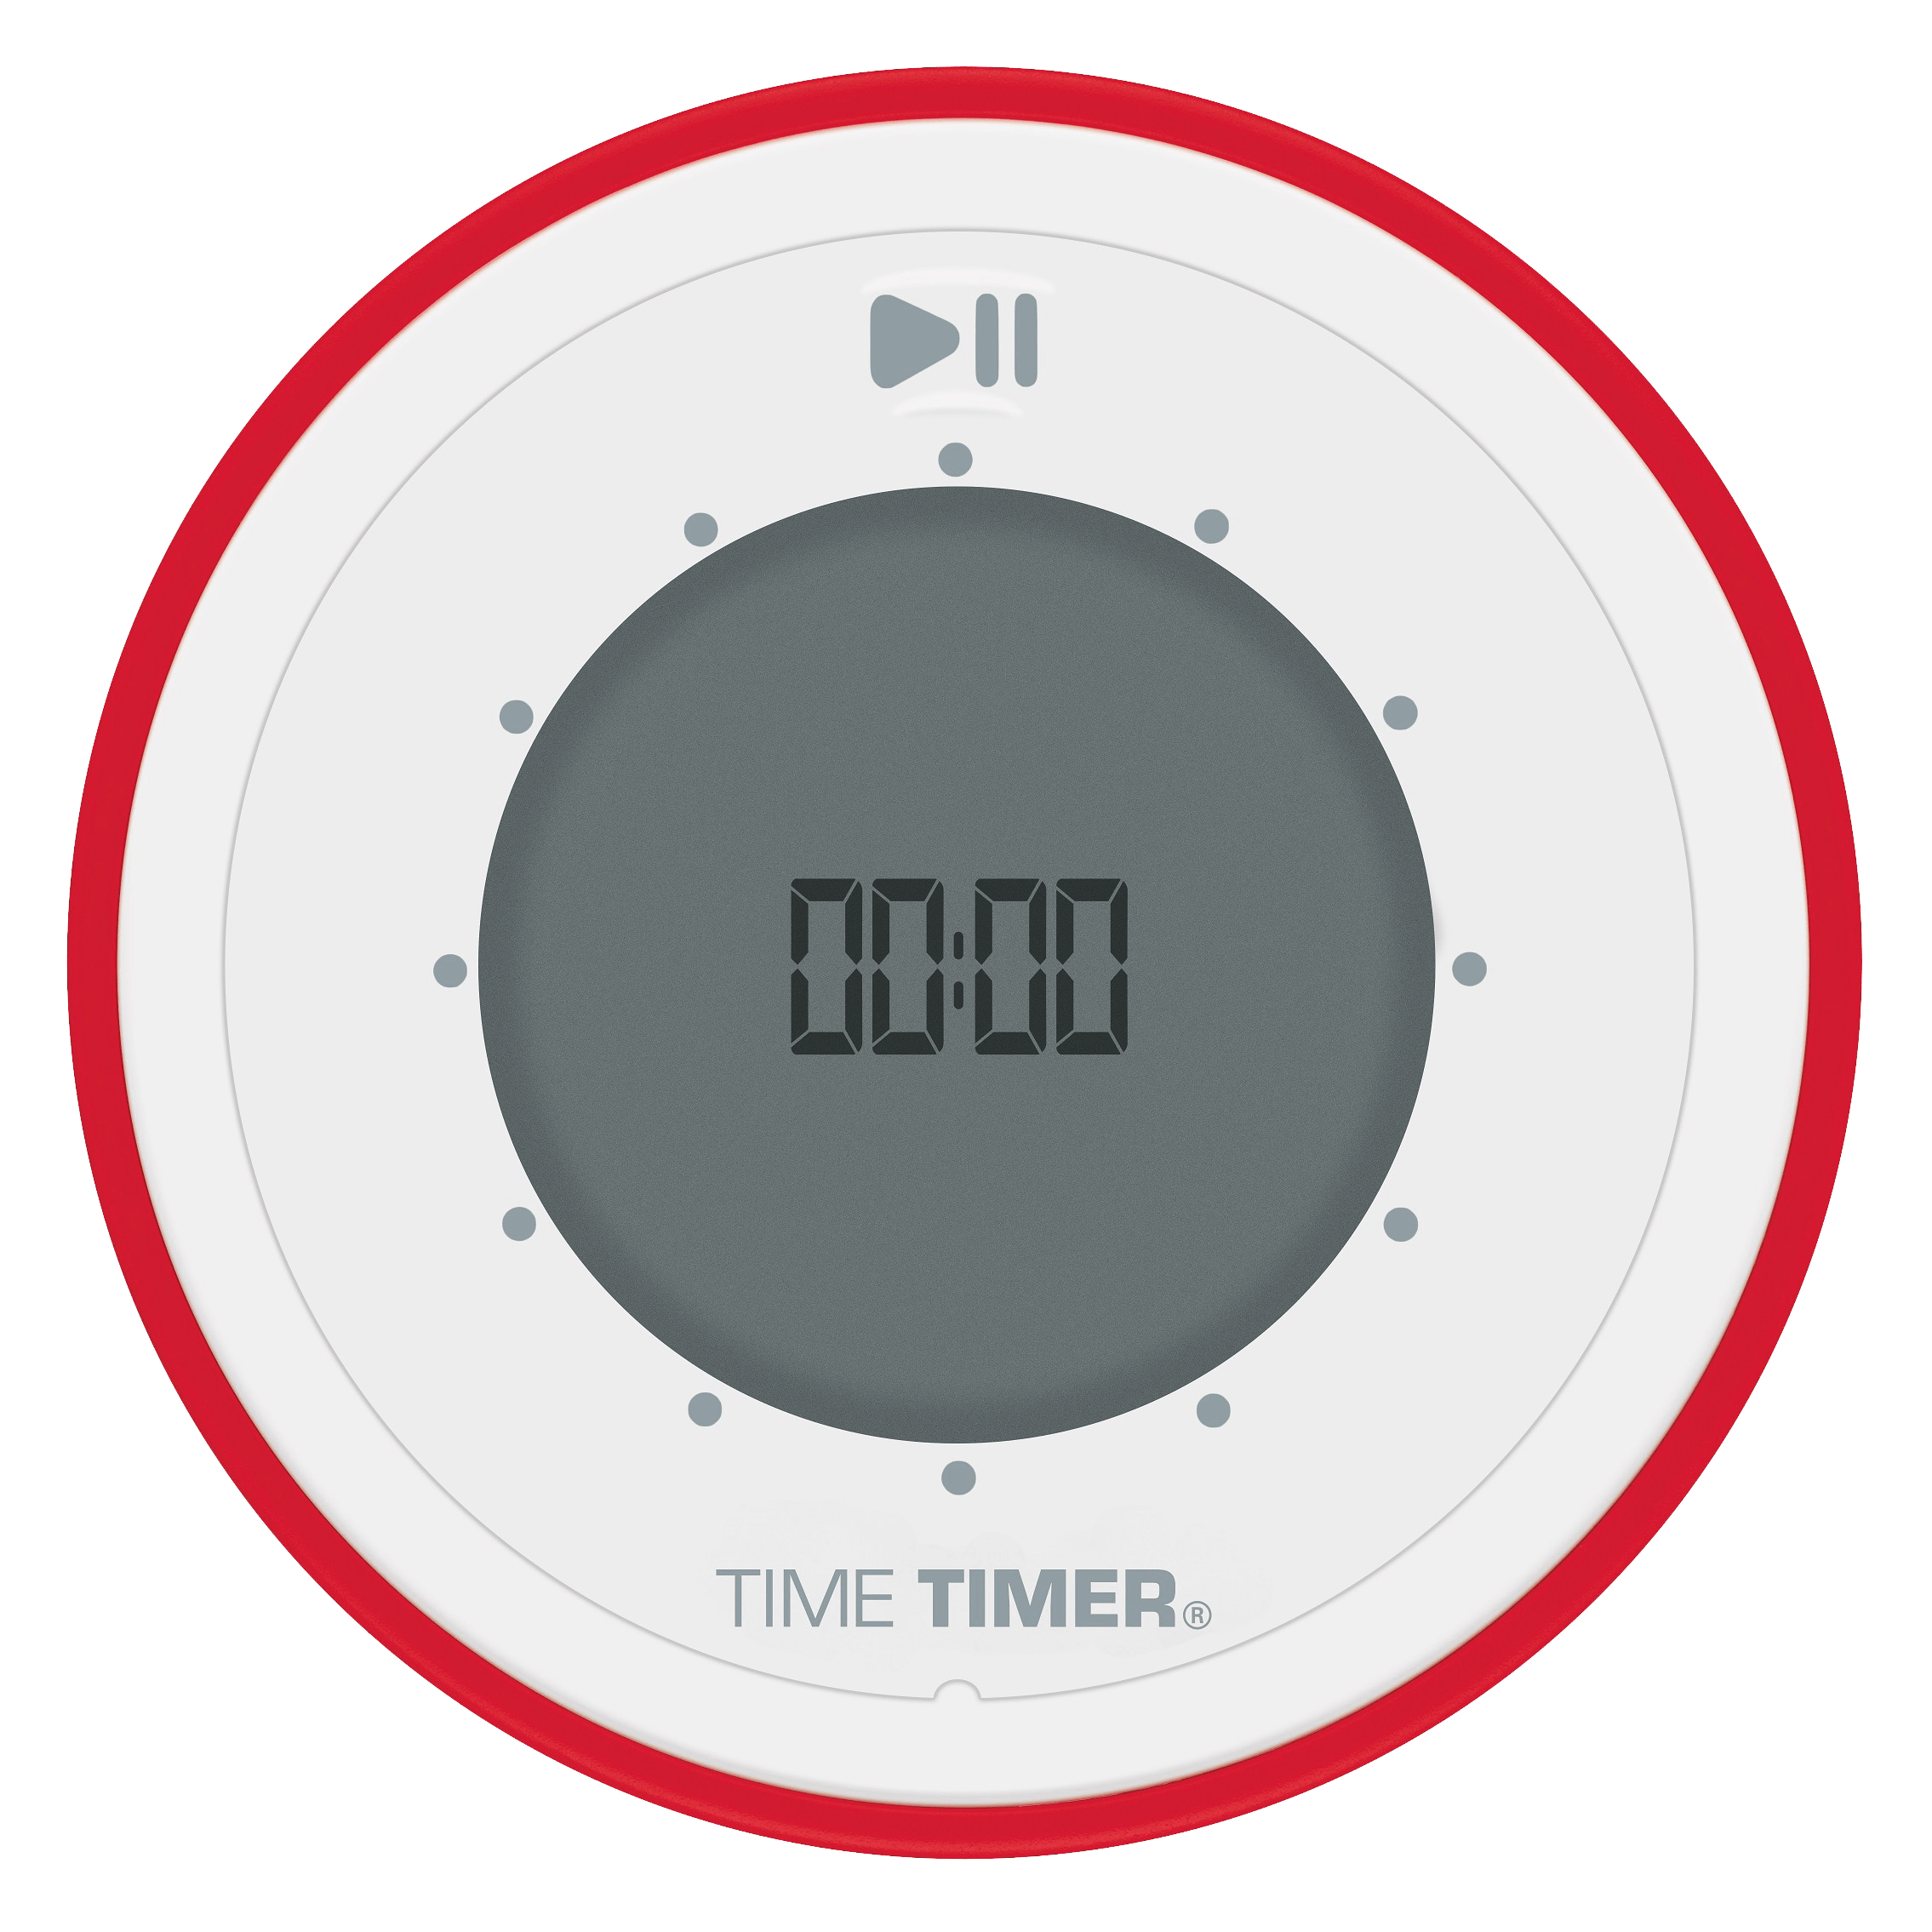 Time Timer Twist